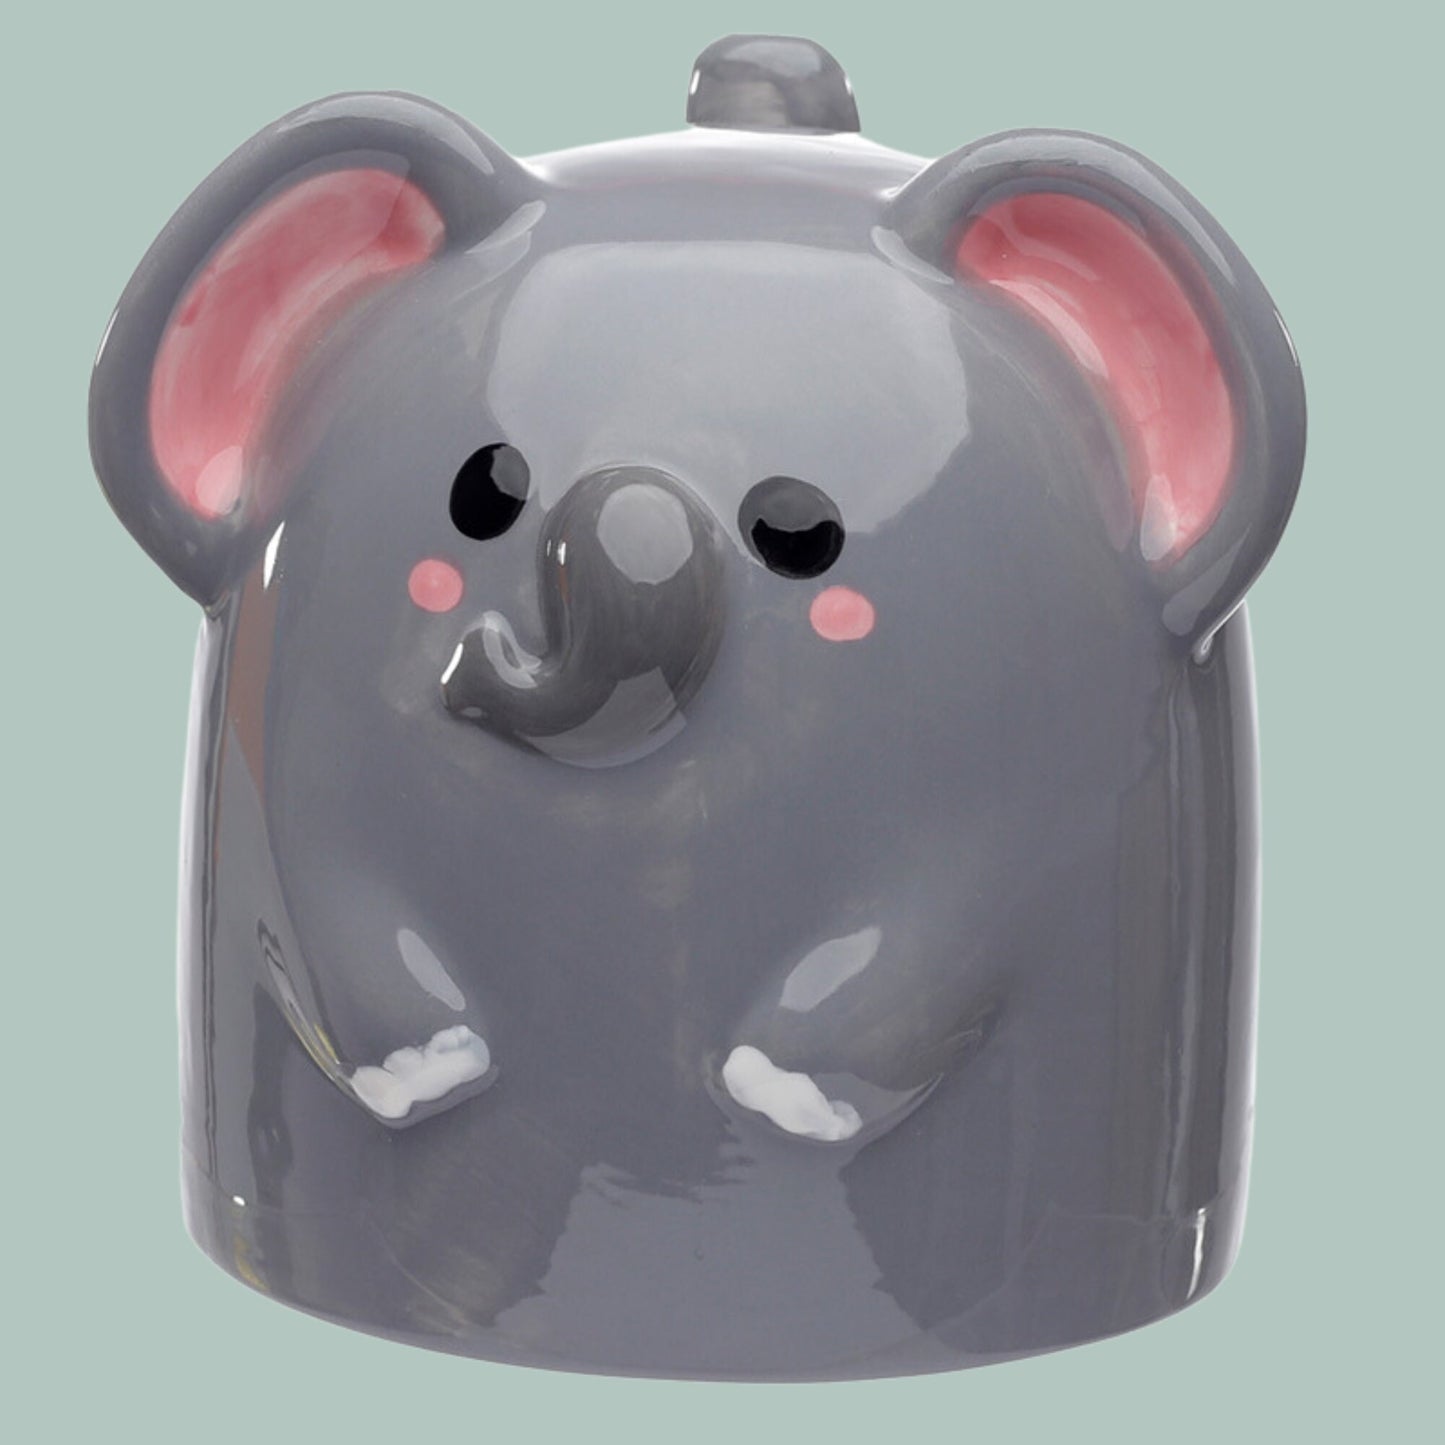 Upside Down Elephant Mug Novelty Ceramic Mug Elephant Lover Gift Animal Lover Present Drinkware Collectable Cute Elephant Upside Down Mug